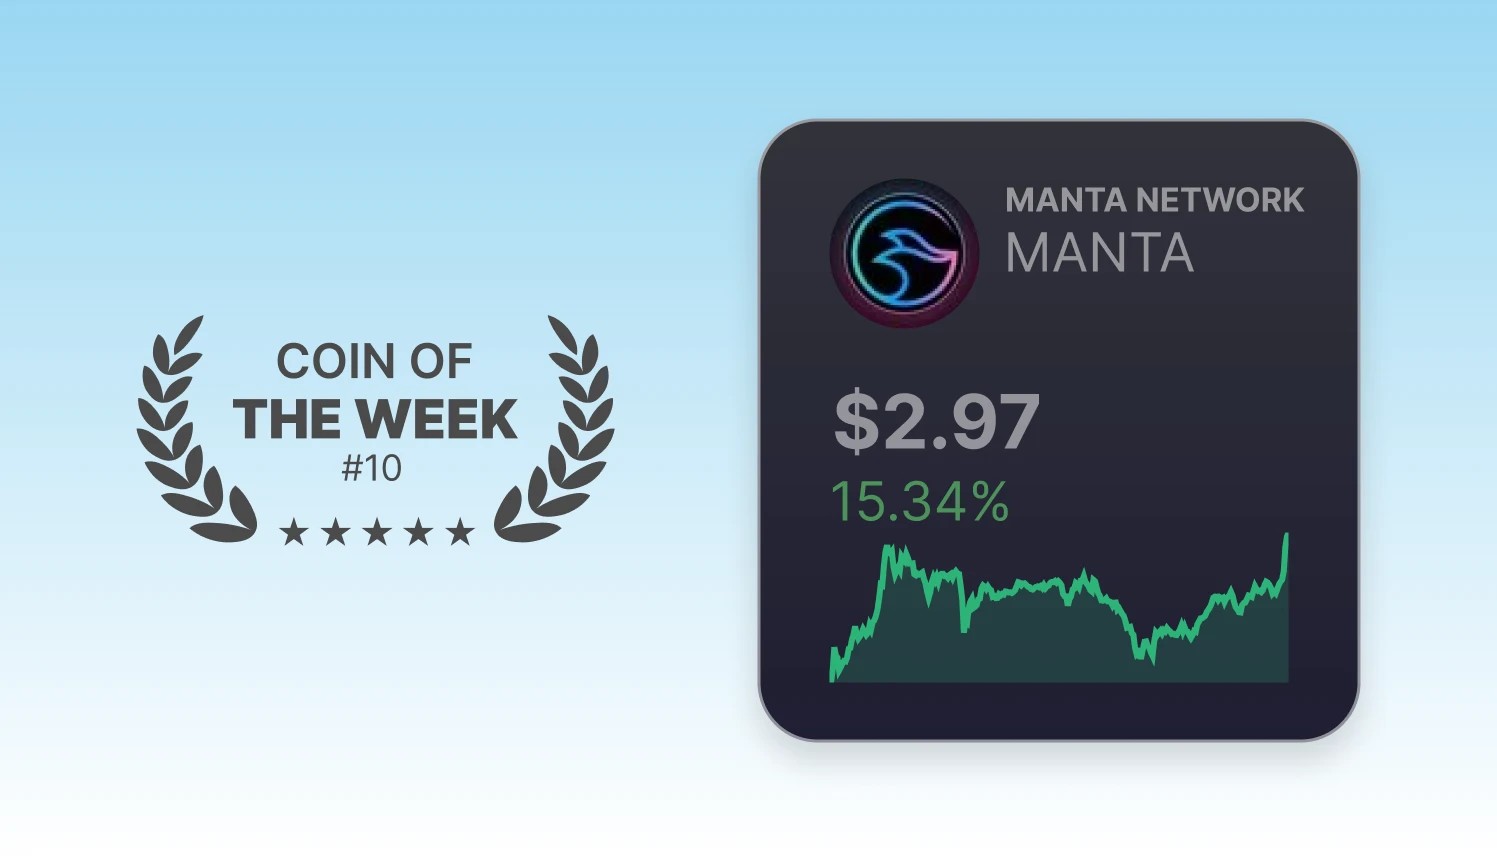 Coin of the Week - MANTA - Week 10